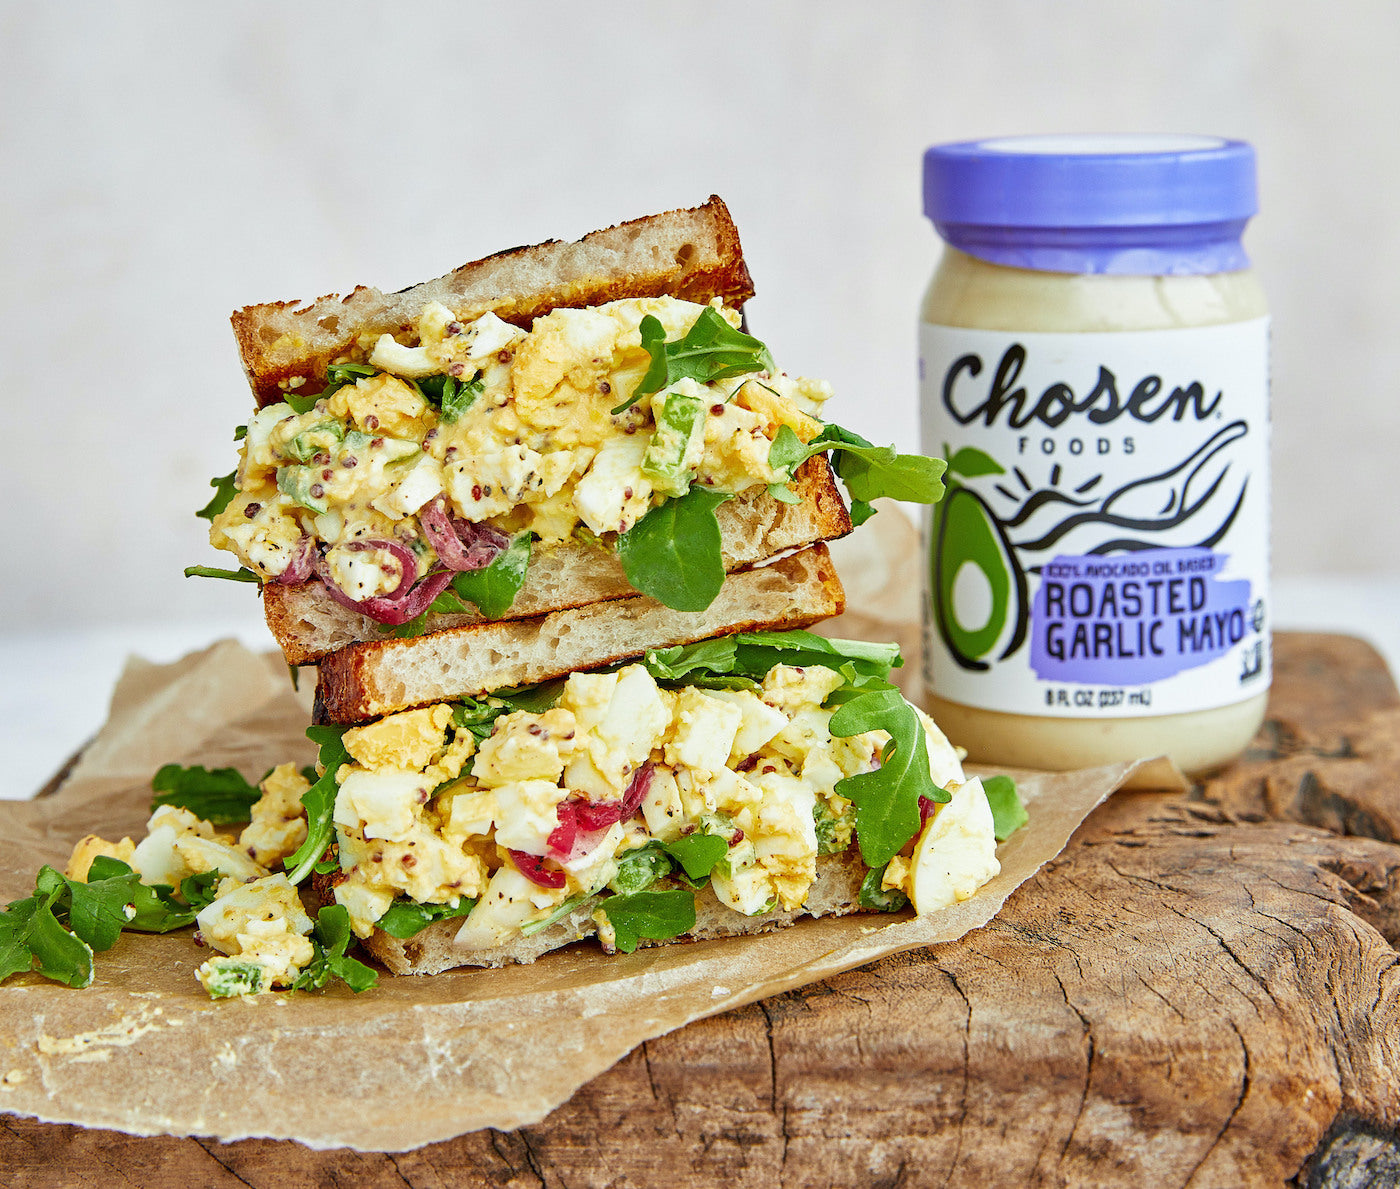 Egg Salad Sandwich made with Chosen Foods Roasted Garlic Mayo